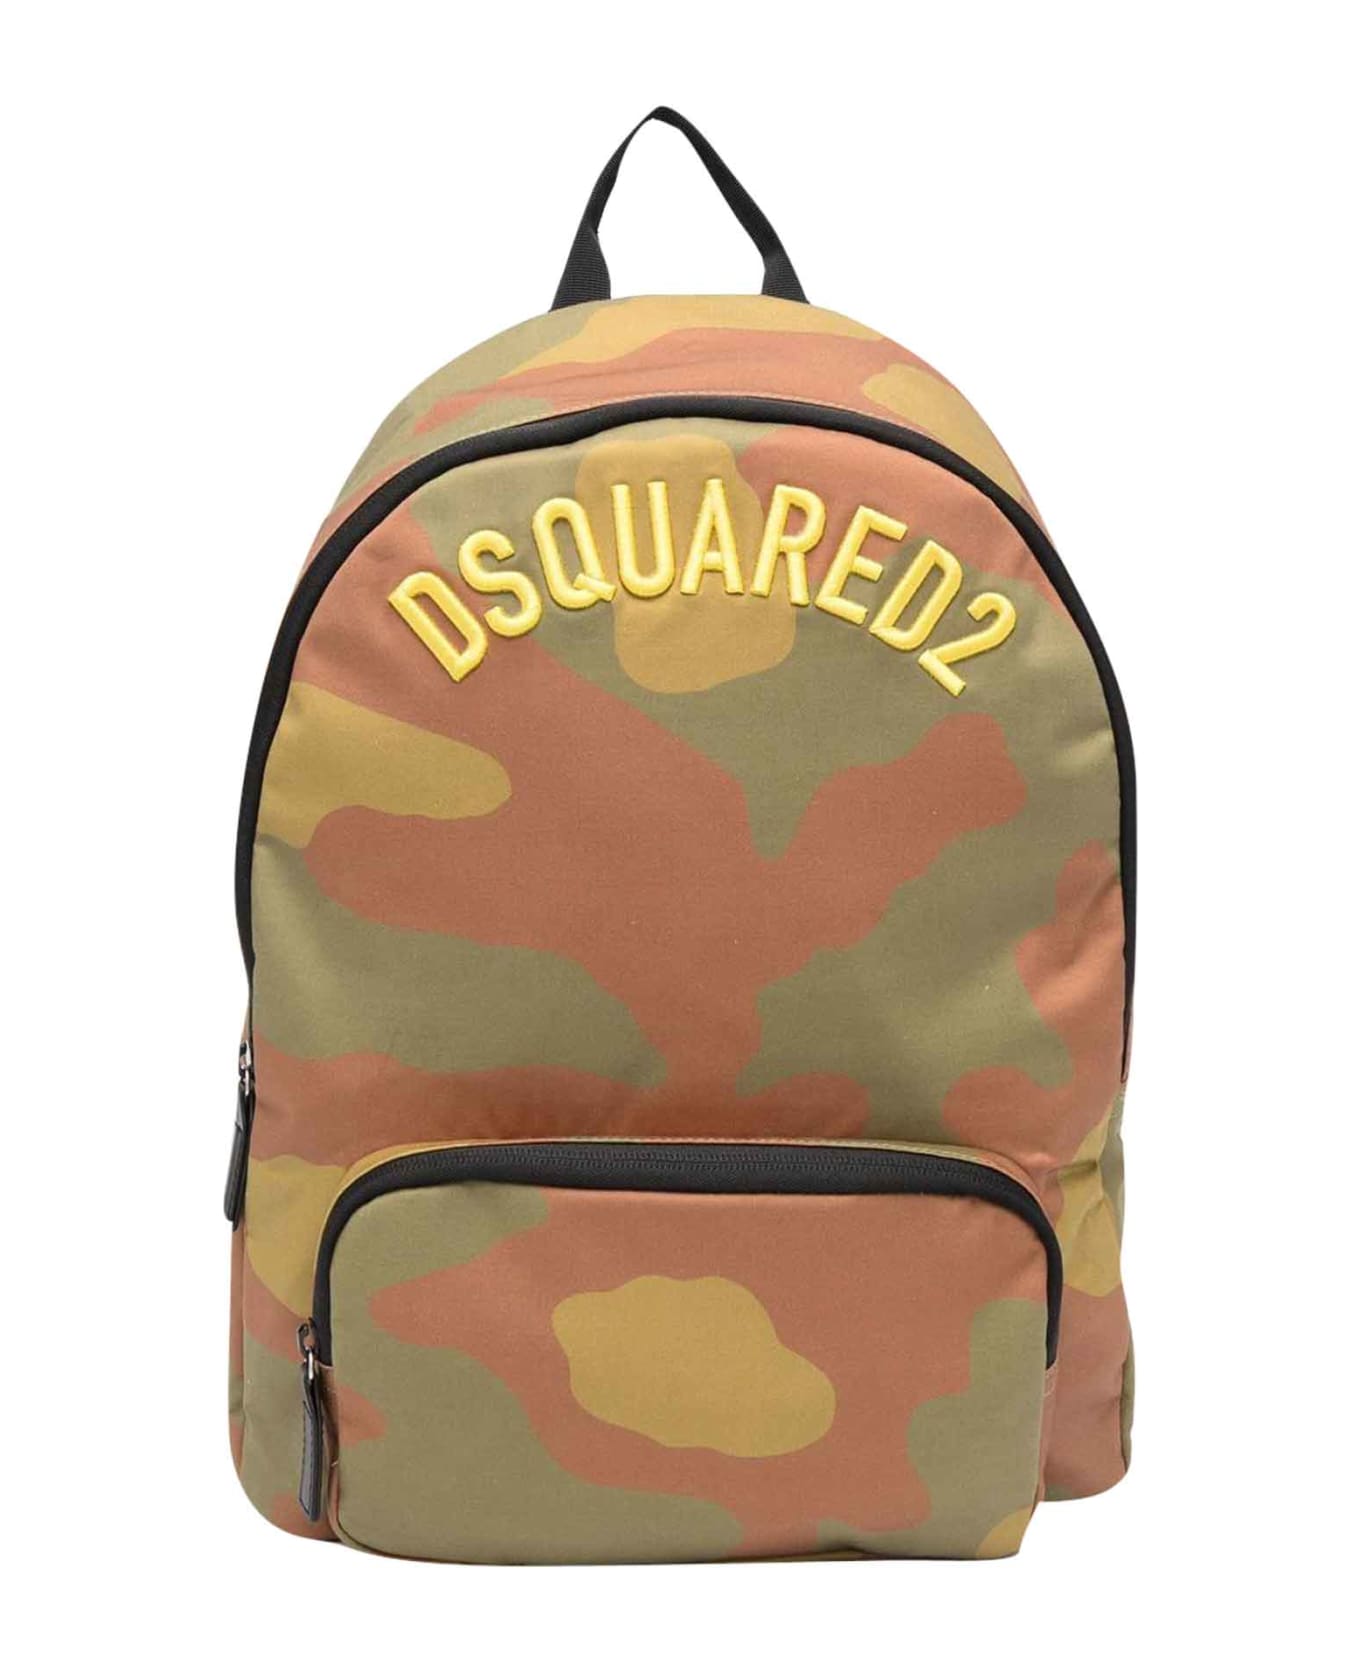 Dsquared2 Camouflage Backpack Unisex - Camouflage